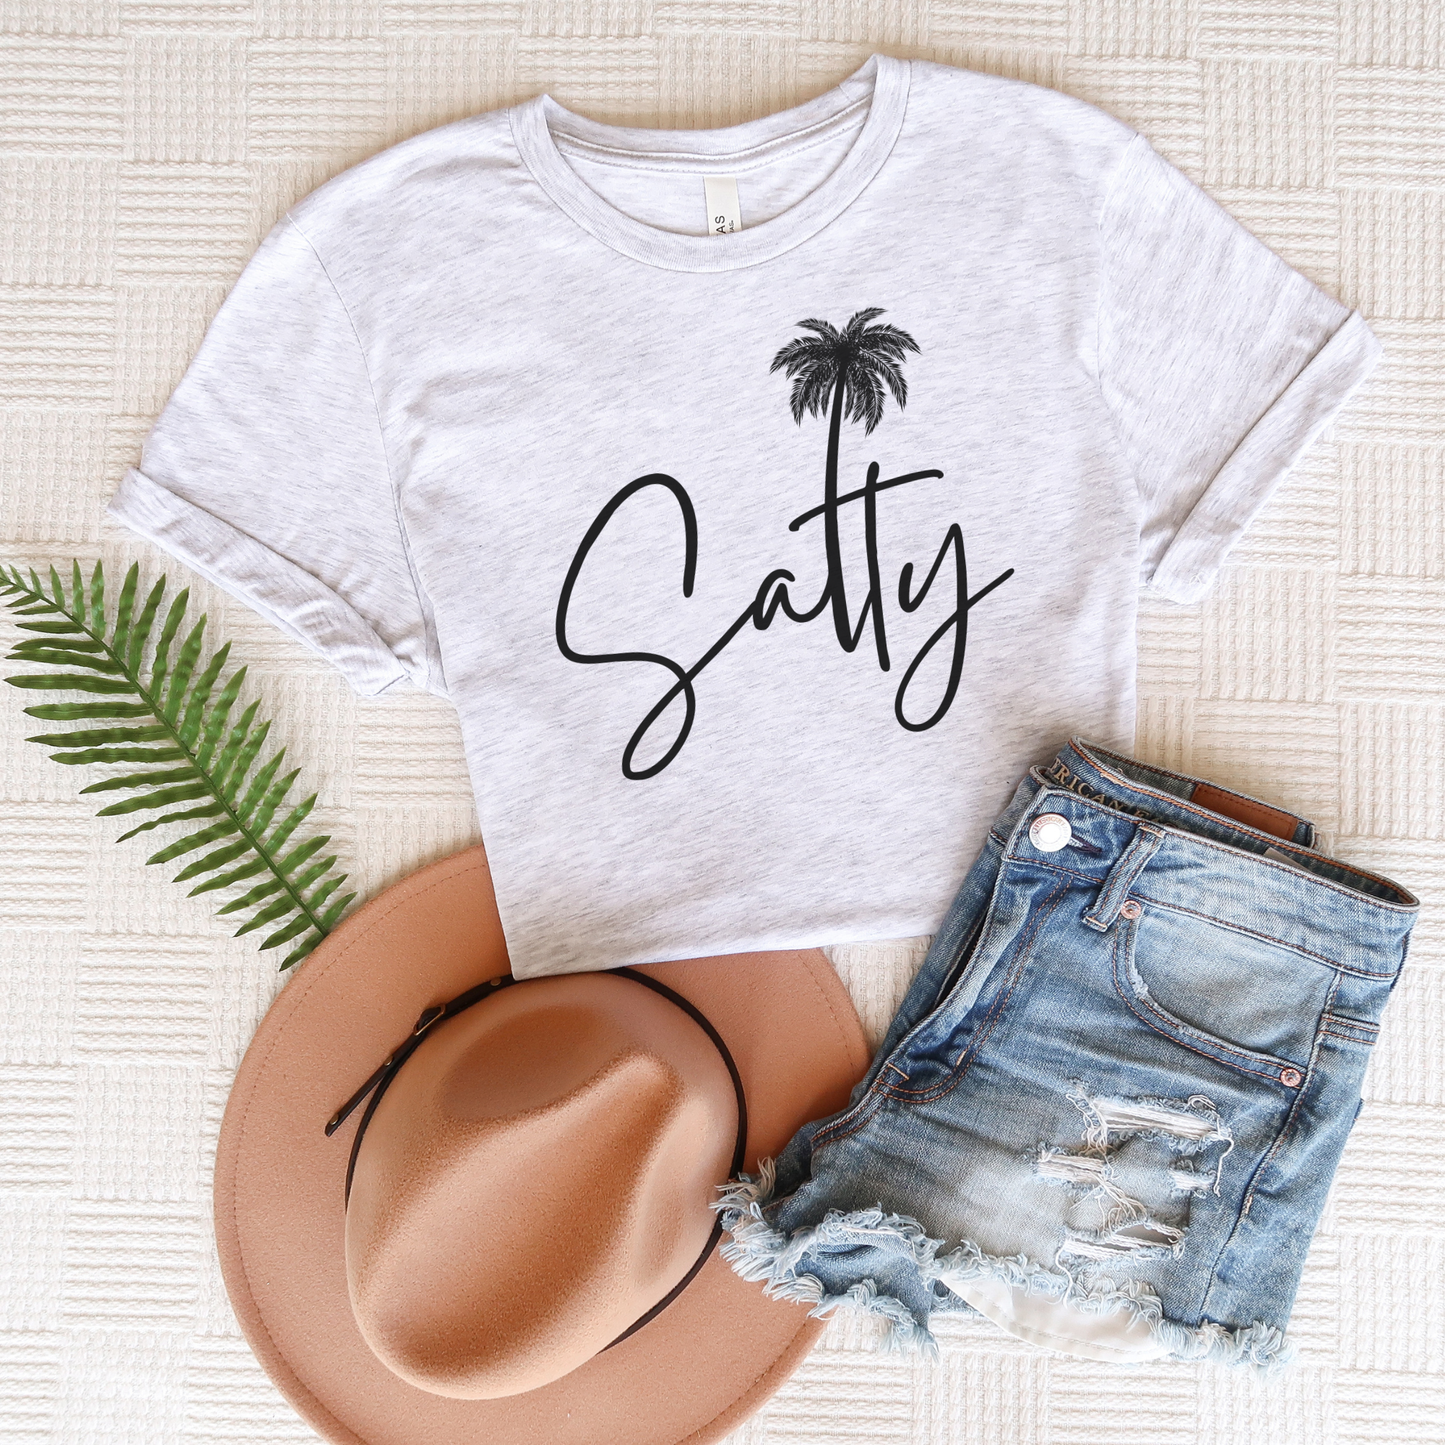 Trendznmore - Salty Beach Graphic T-Shirt: Medium / Stonewash Blue $38